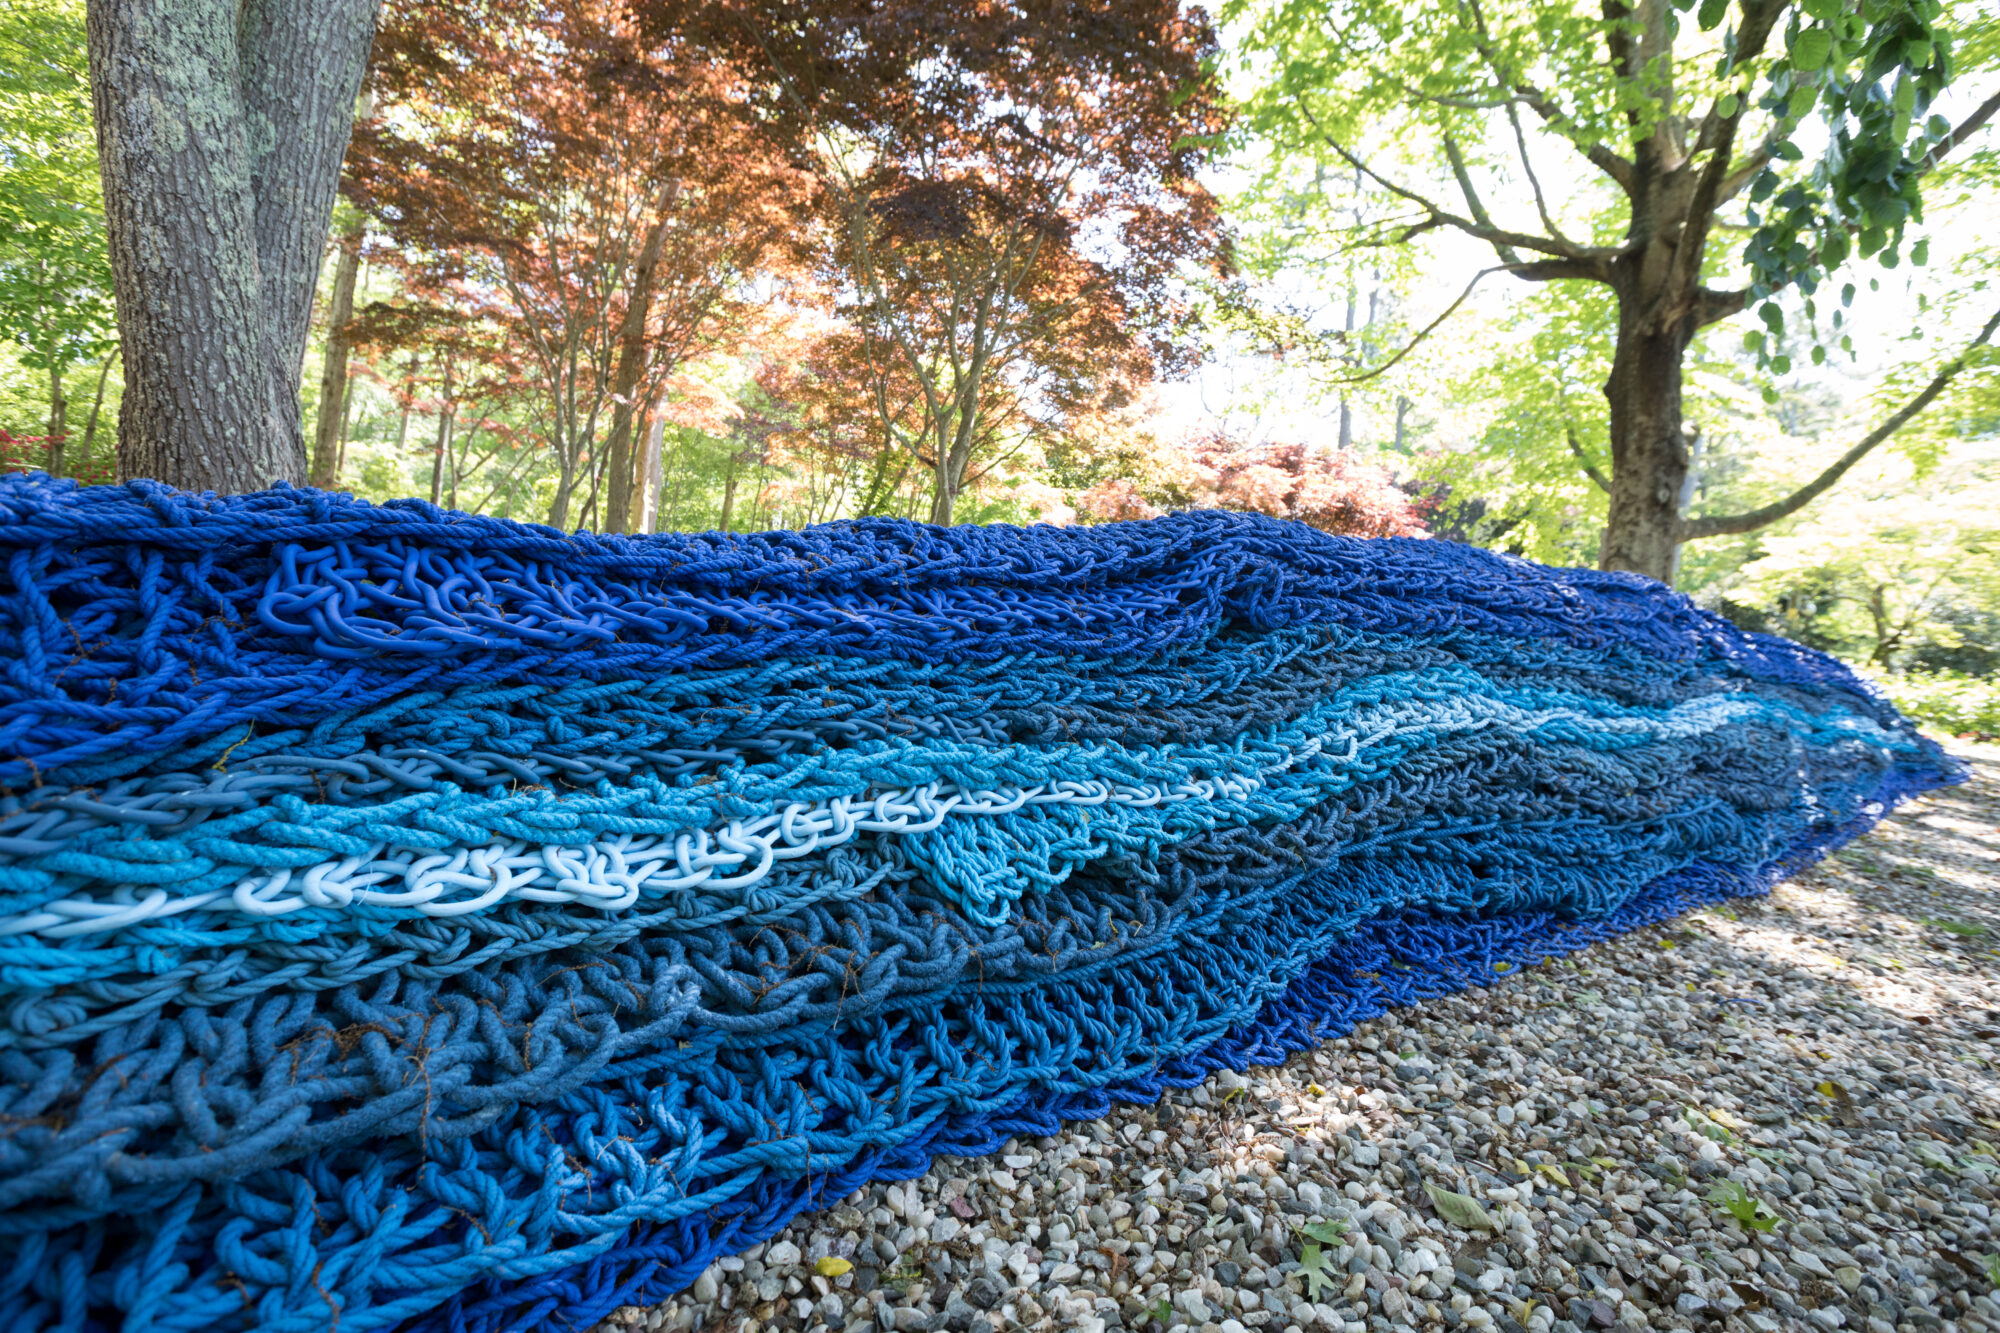 Large outdoor blue fiber art installation woven together at Narrative Threads: Fiber Art Today